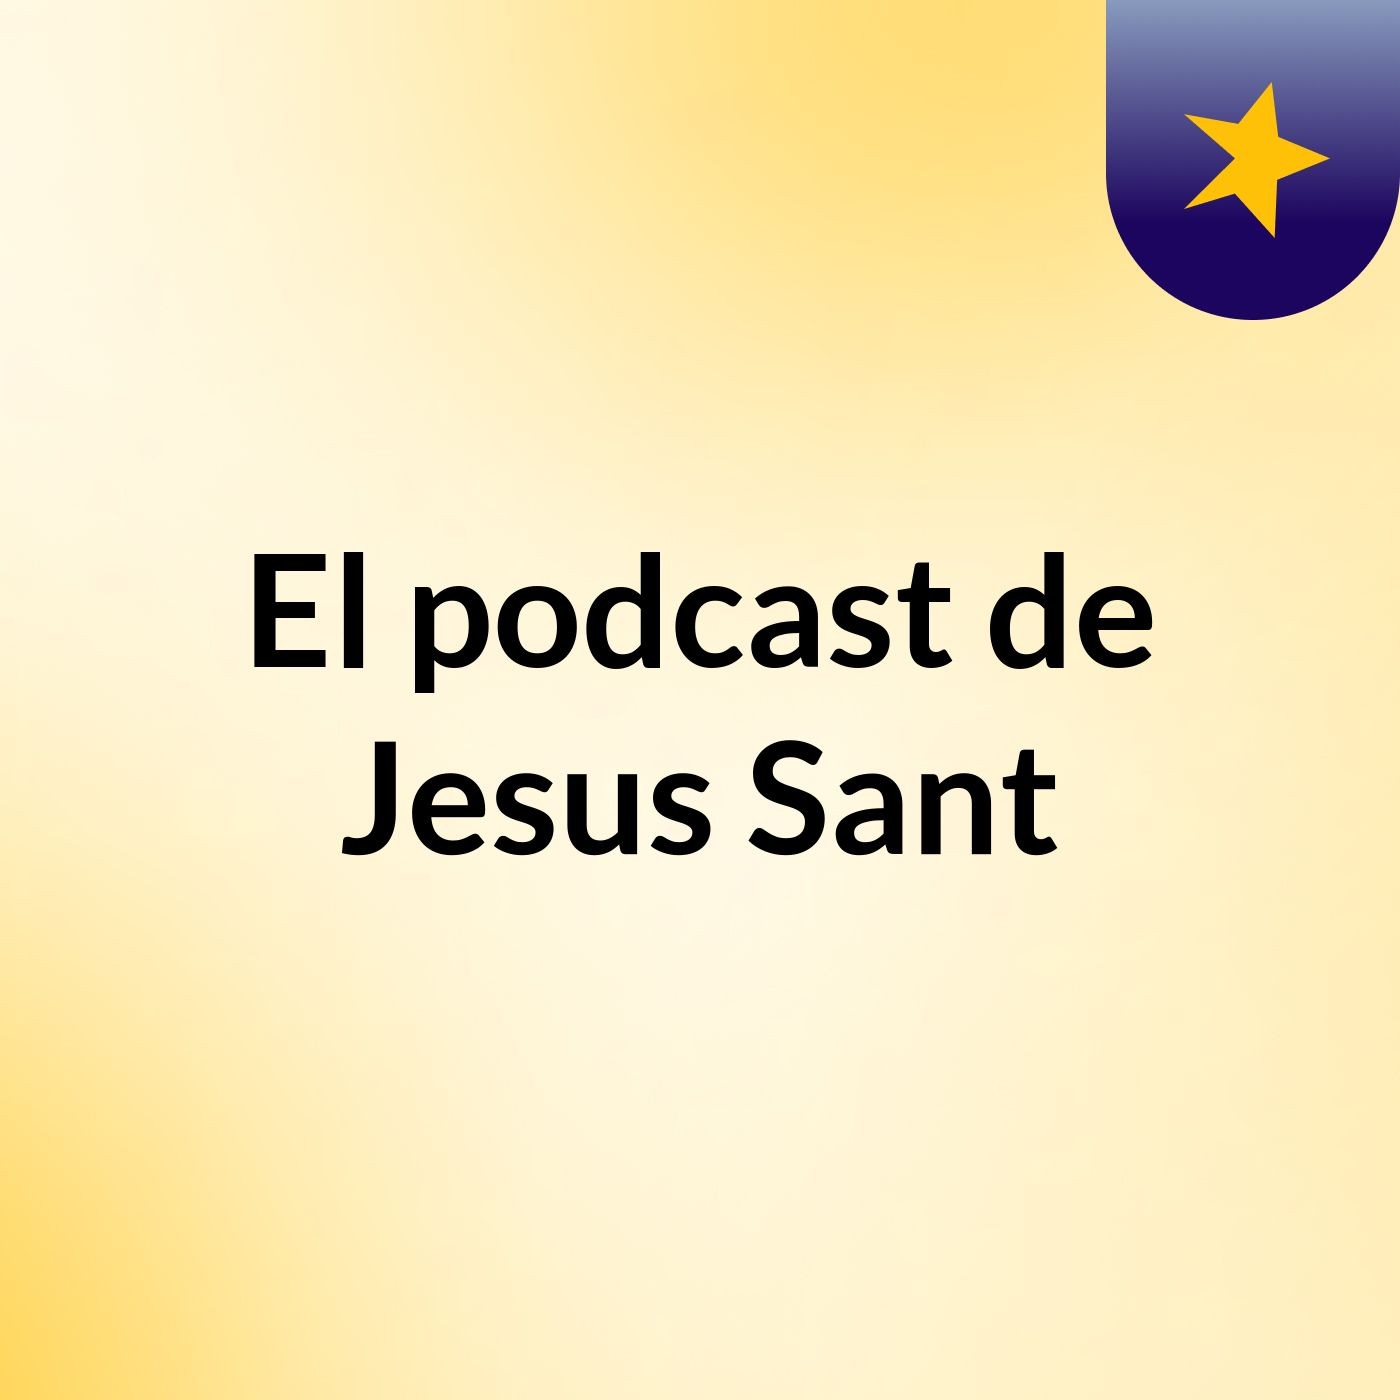 El podcast de Jesus Sant